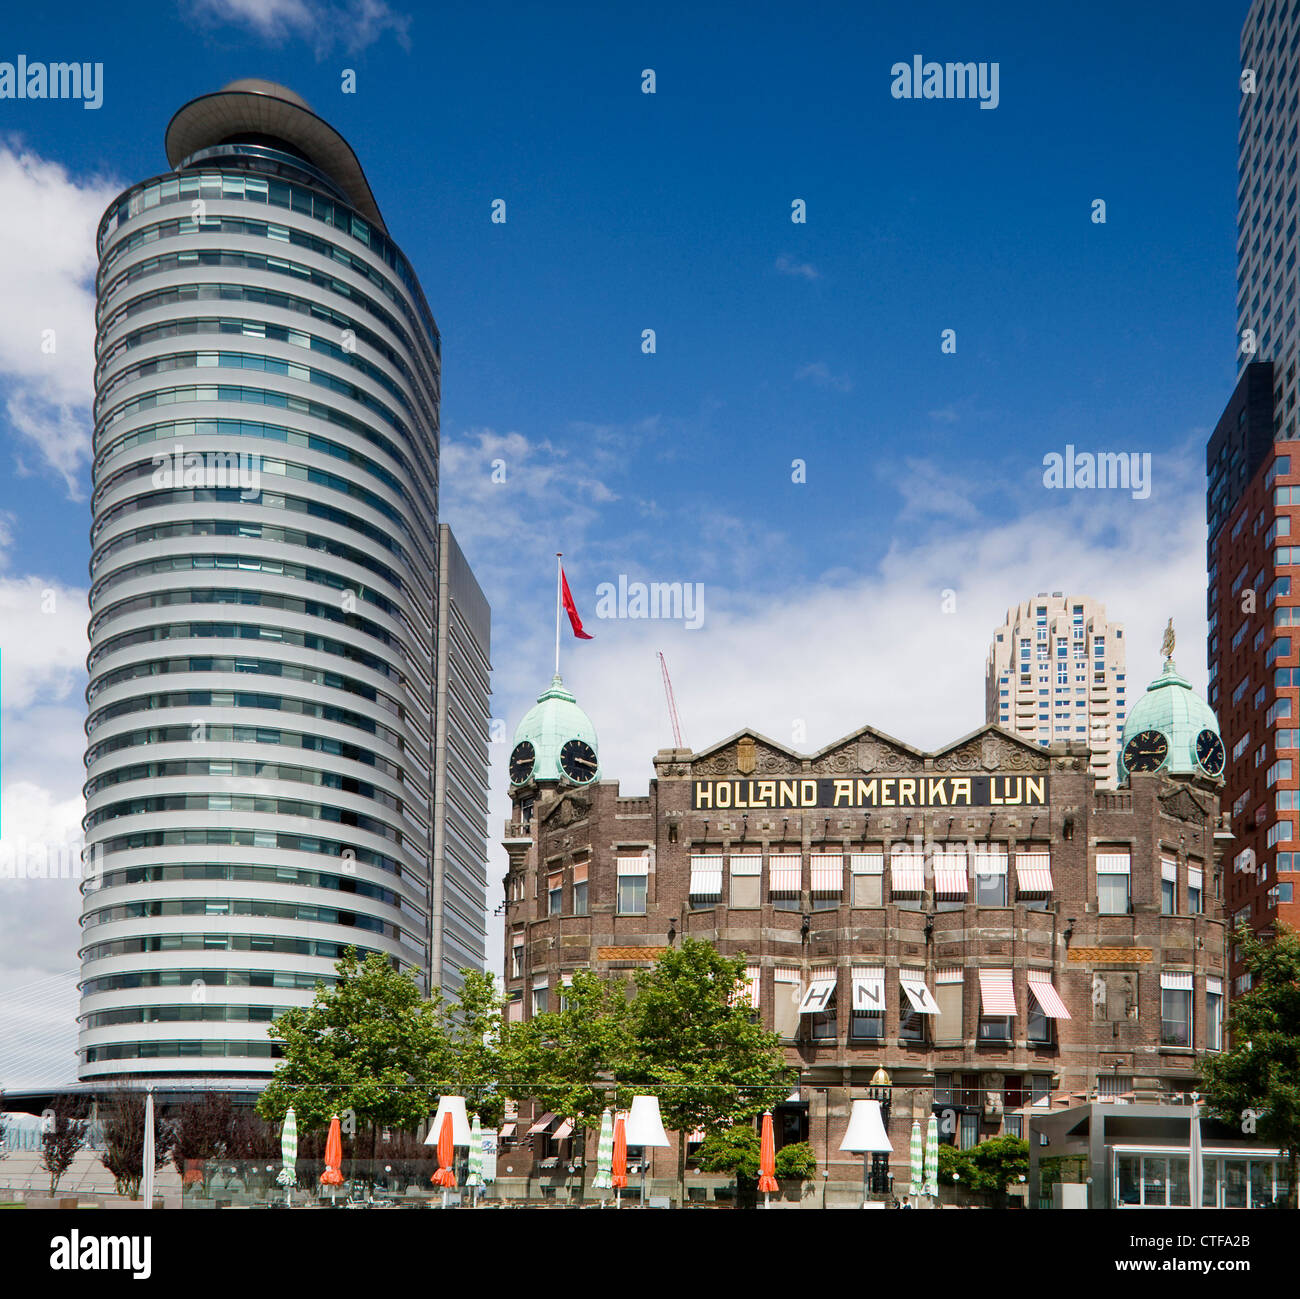 Hotel New York Rotterdam Netherlands Stock Photo